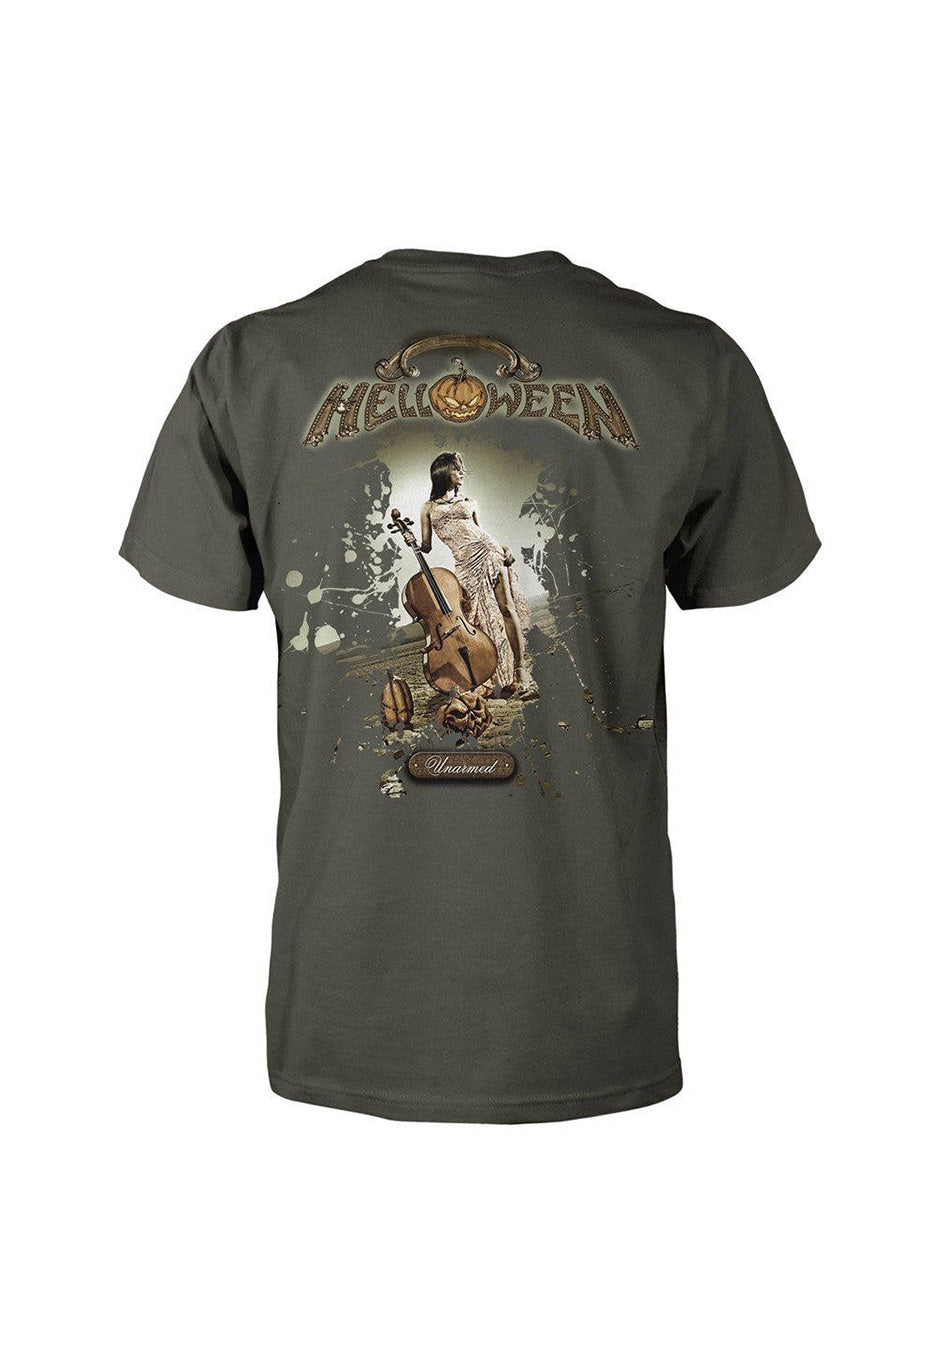 Helloween - Unarmed Khaki - T-Shirt